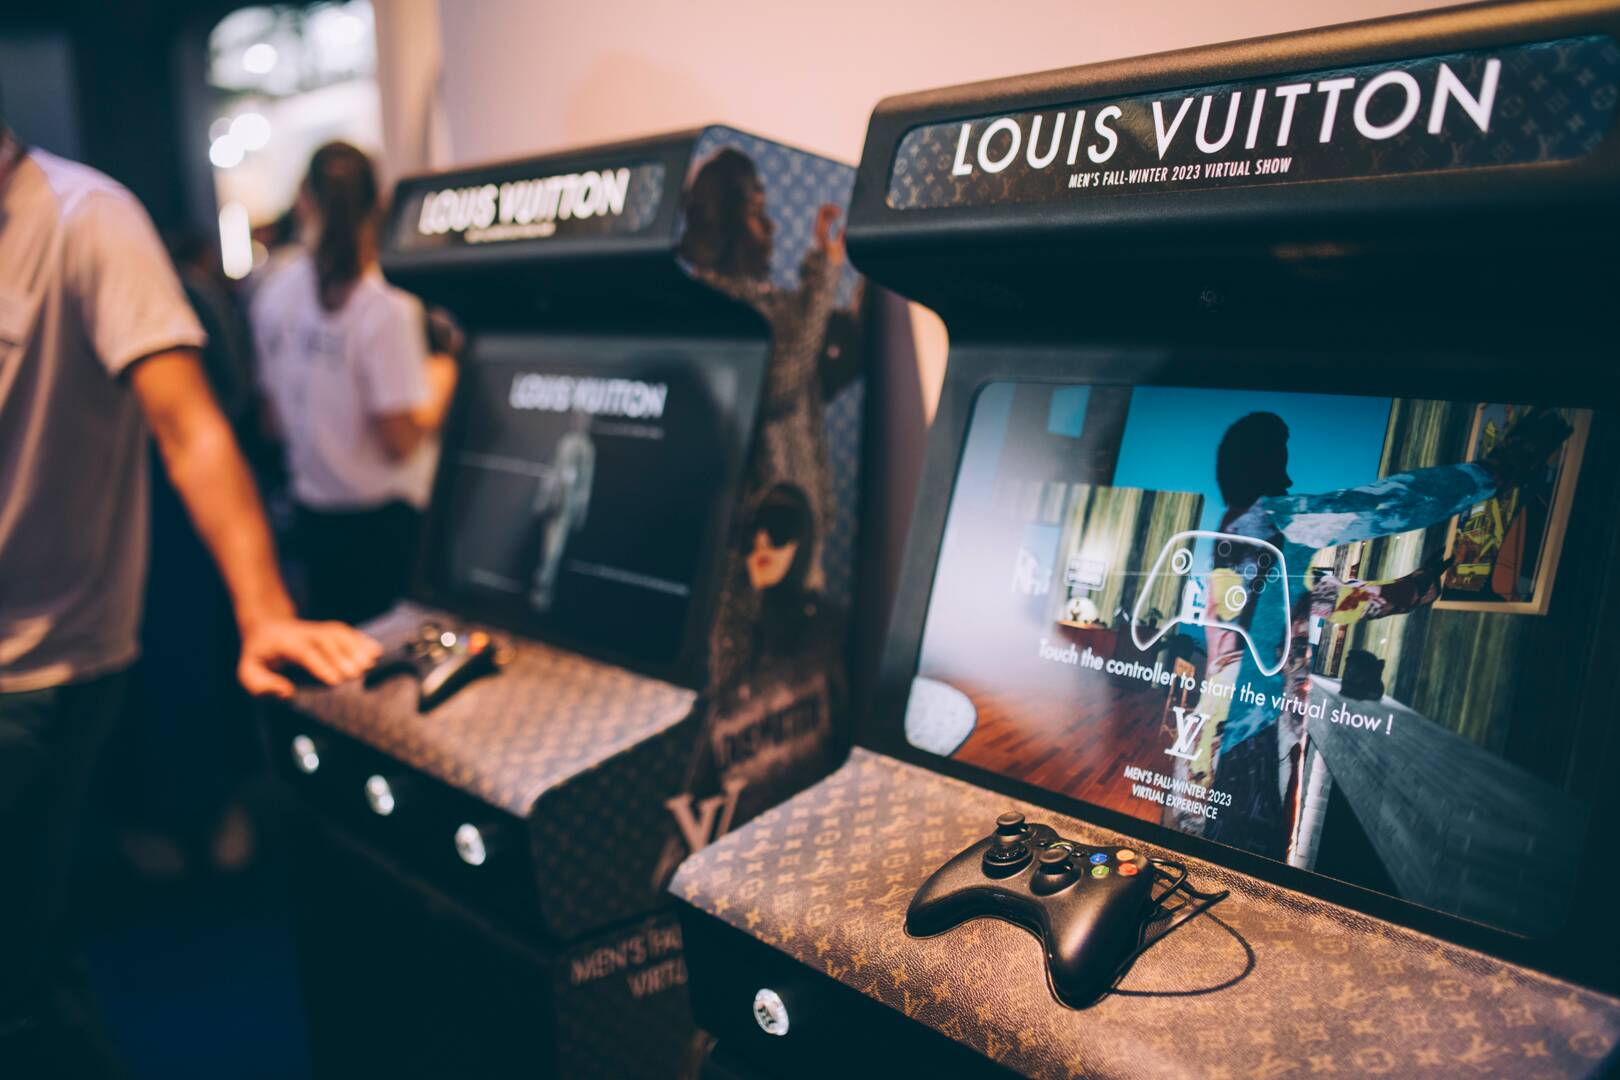 Viva Technology on X: JUST IN: Louis Vuitton unveils €39K